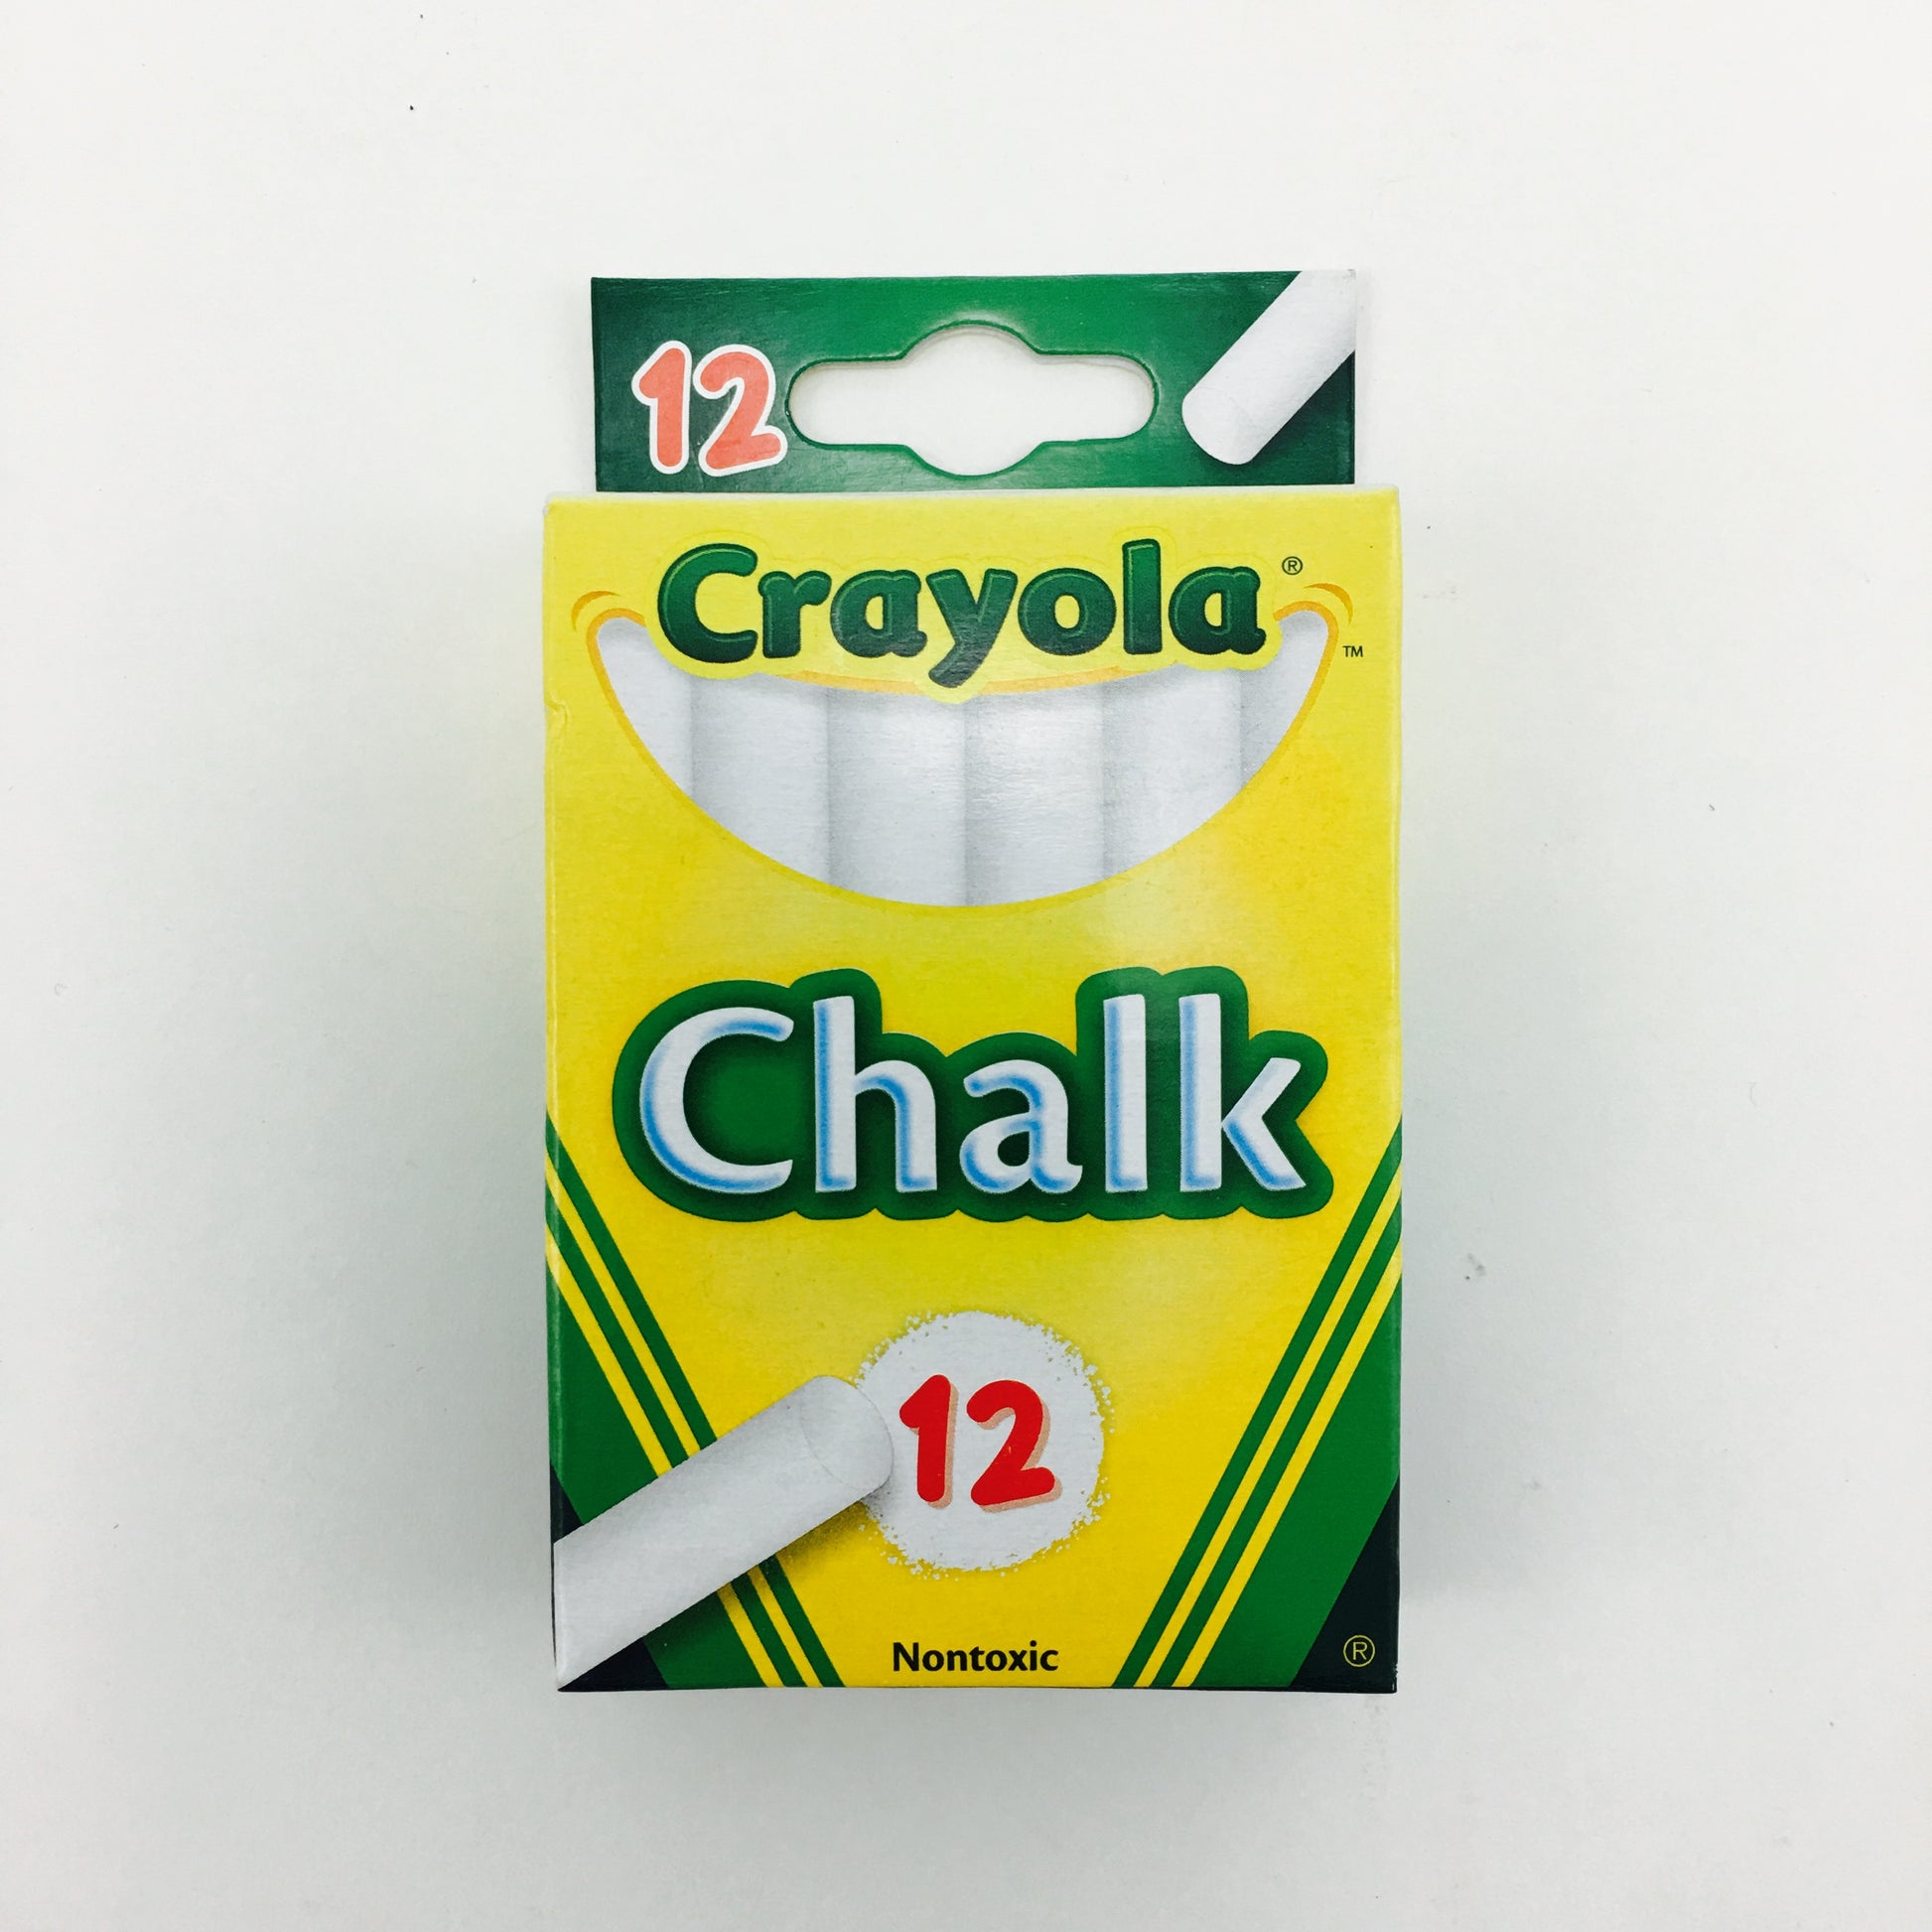 12 White Crayola Crayons